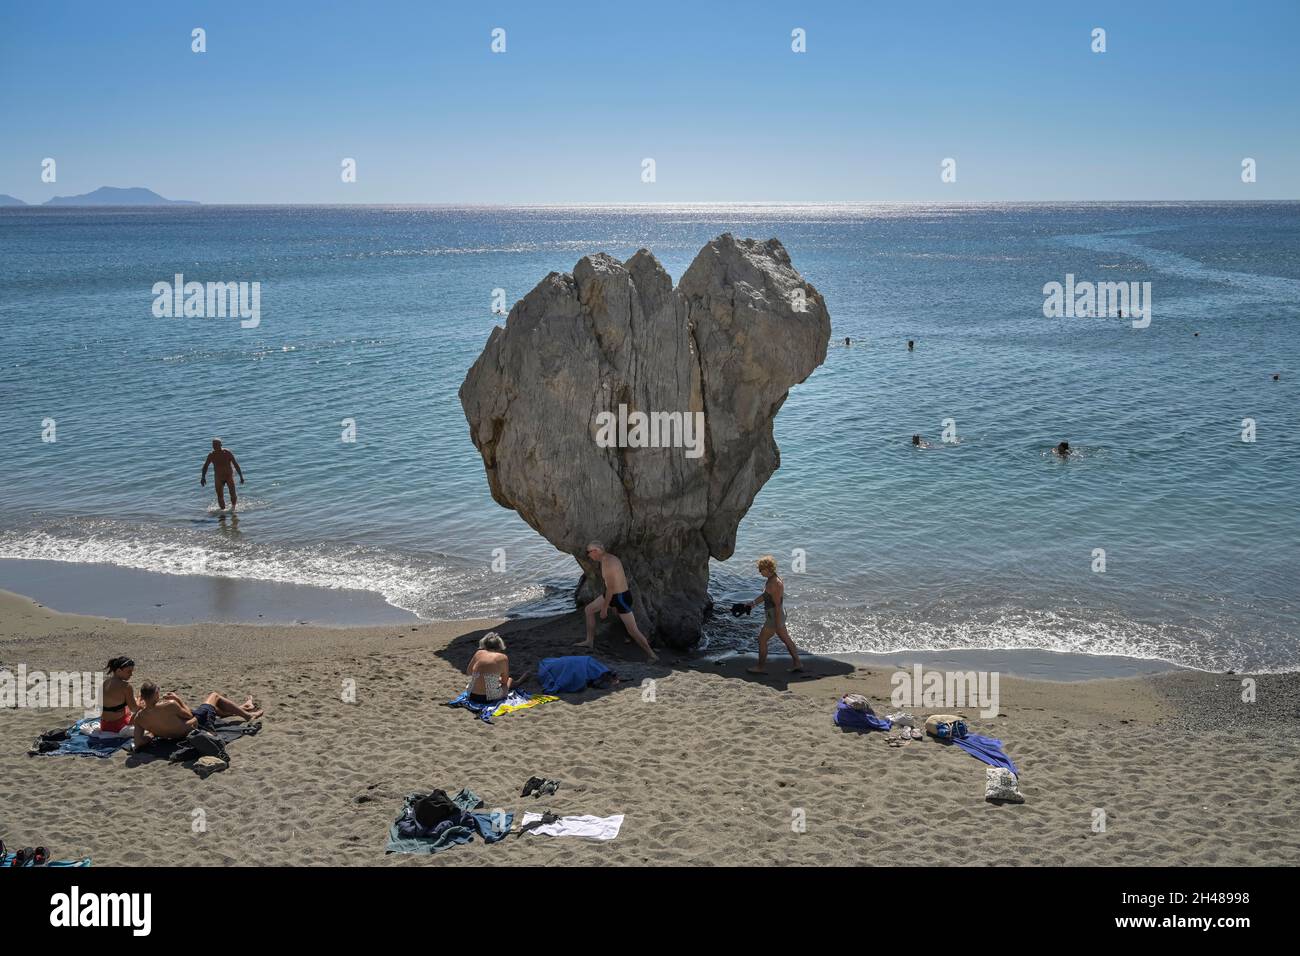 Felsen, Sandstrand, Sonnenbaden, Urlauber, Touristen, Preveli, Kreta, Griechenland Stock Photo